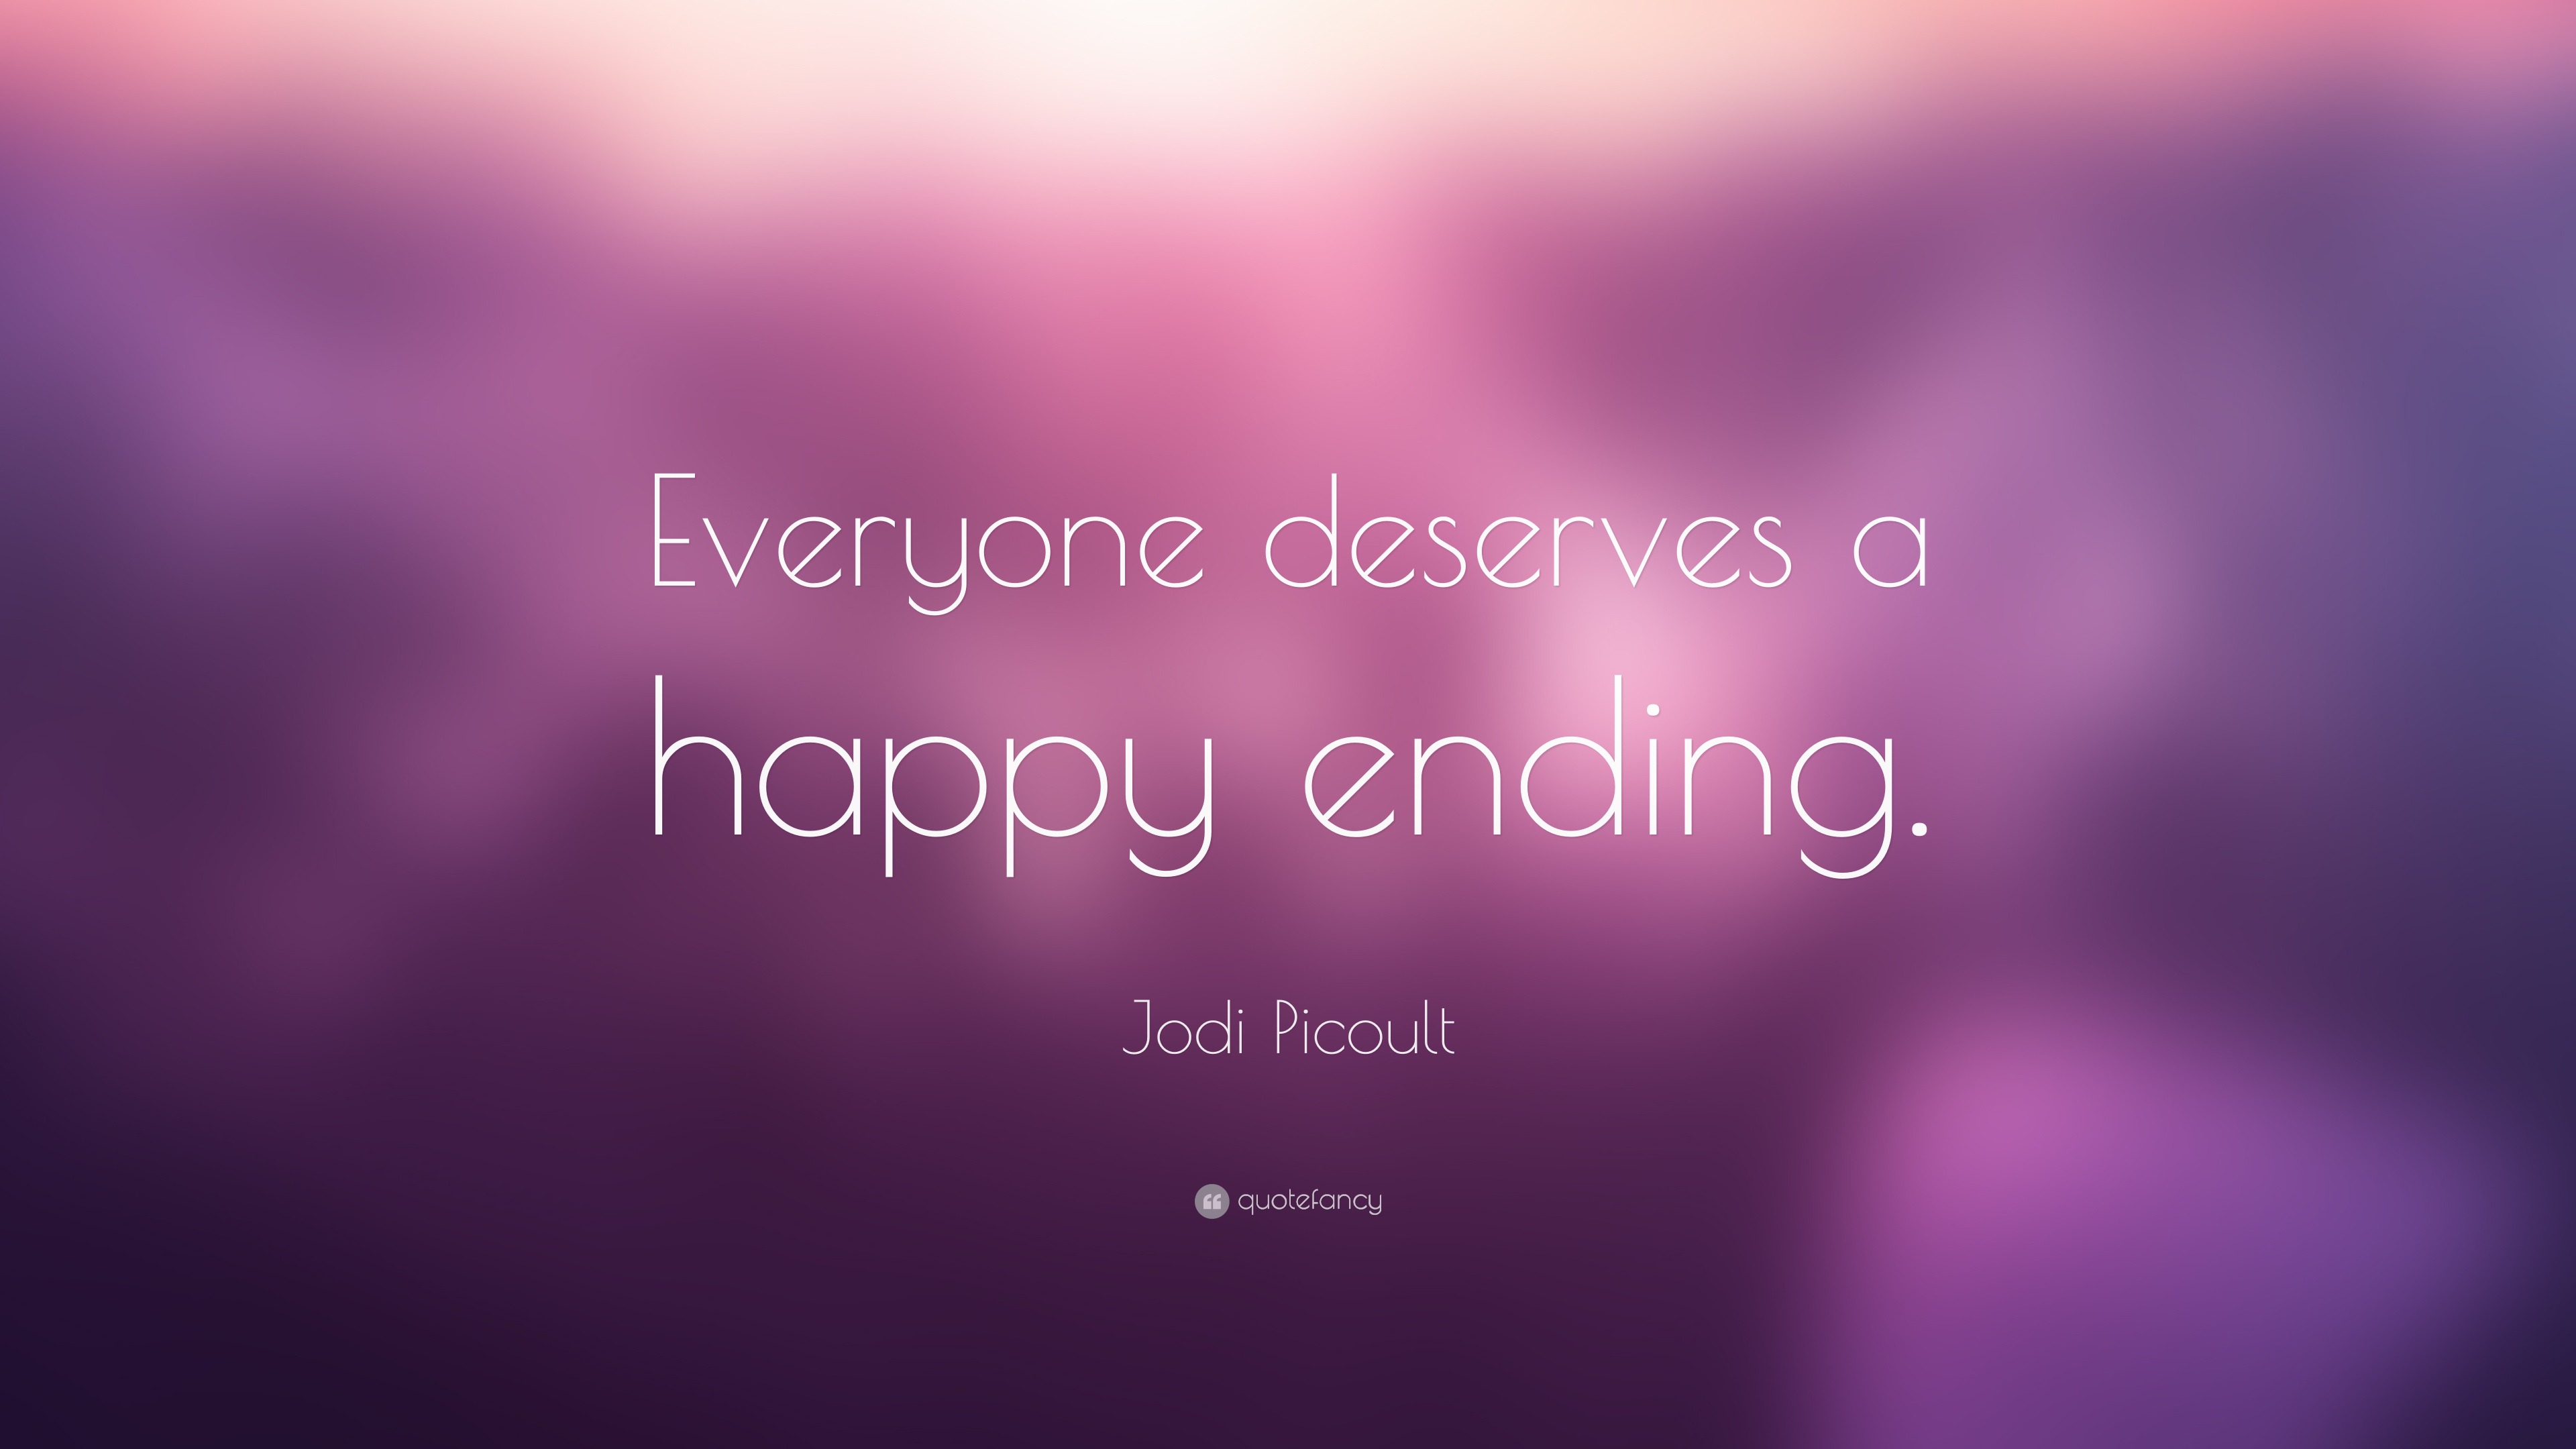 Jodi Picoult Quote: “Everyone deserves a happy ending.”